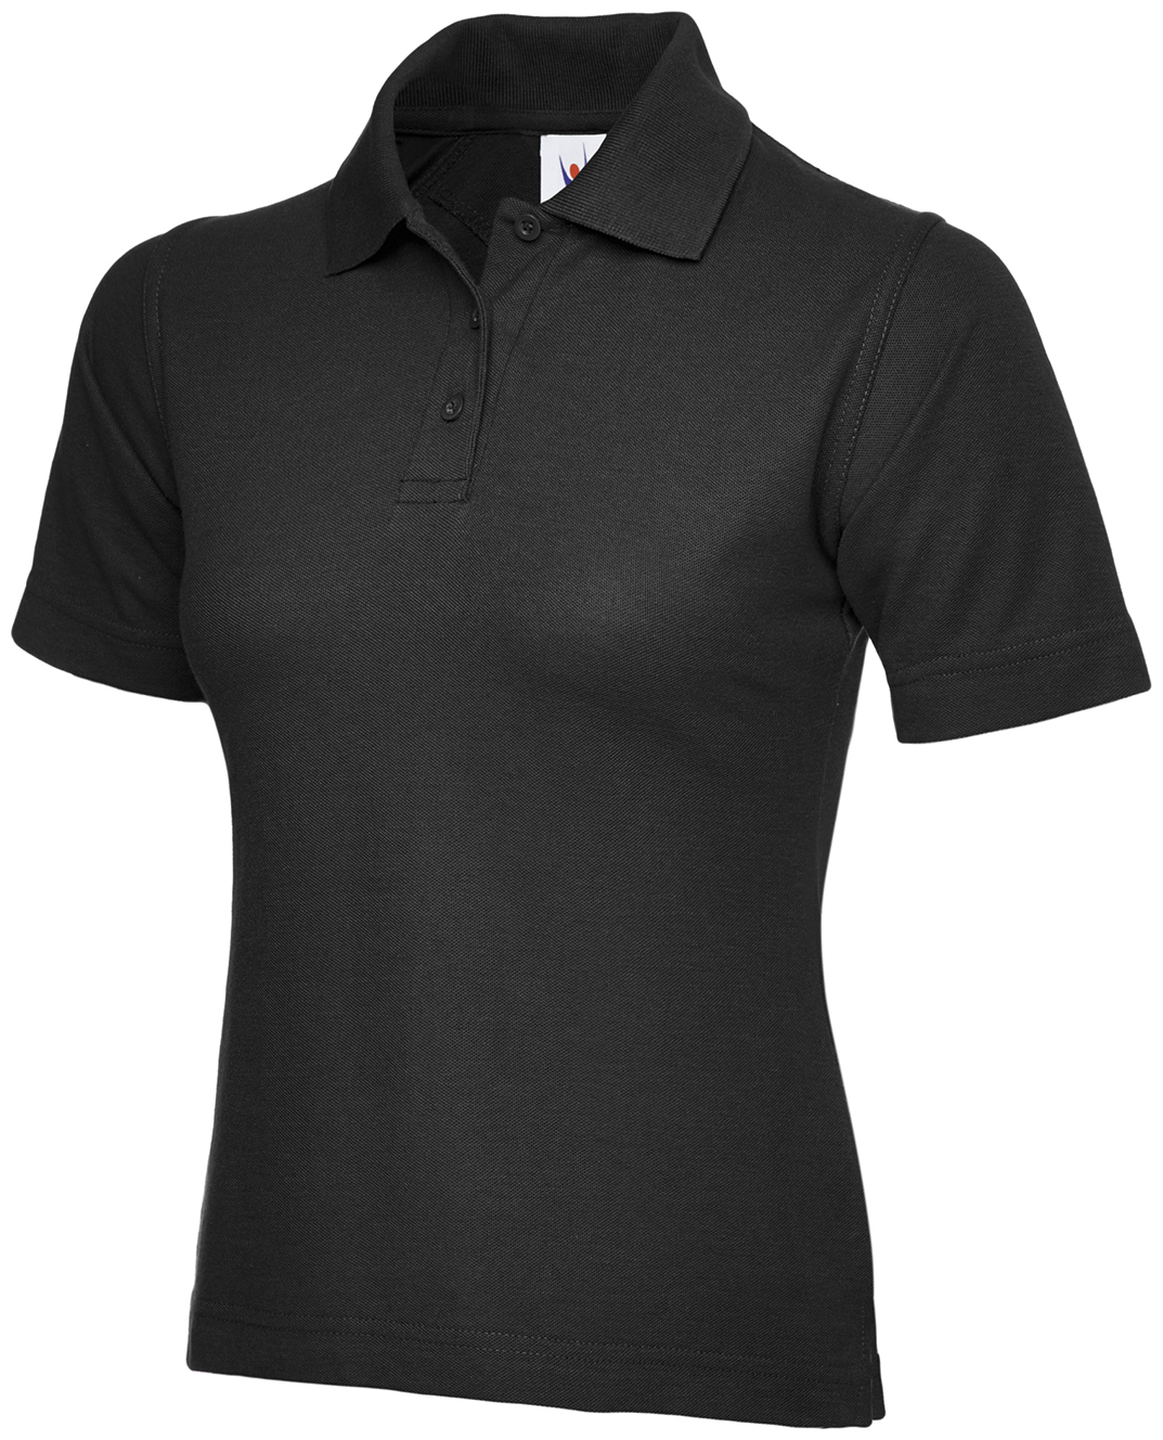 Ladies Classic Poloshirt | Black